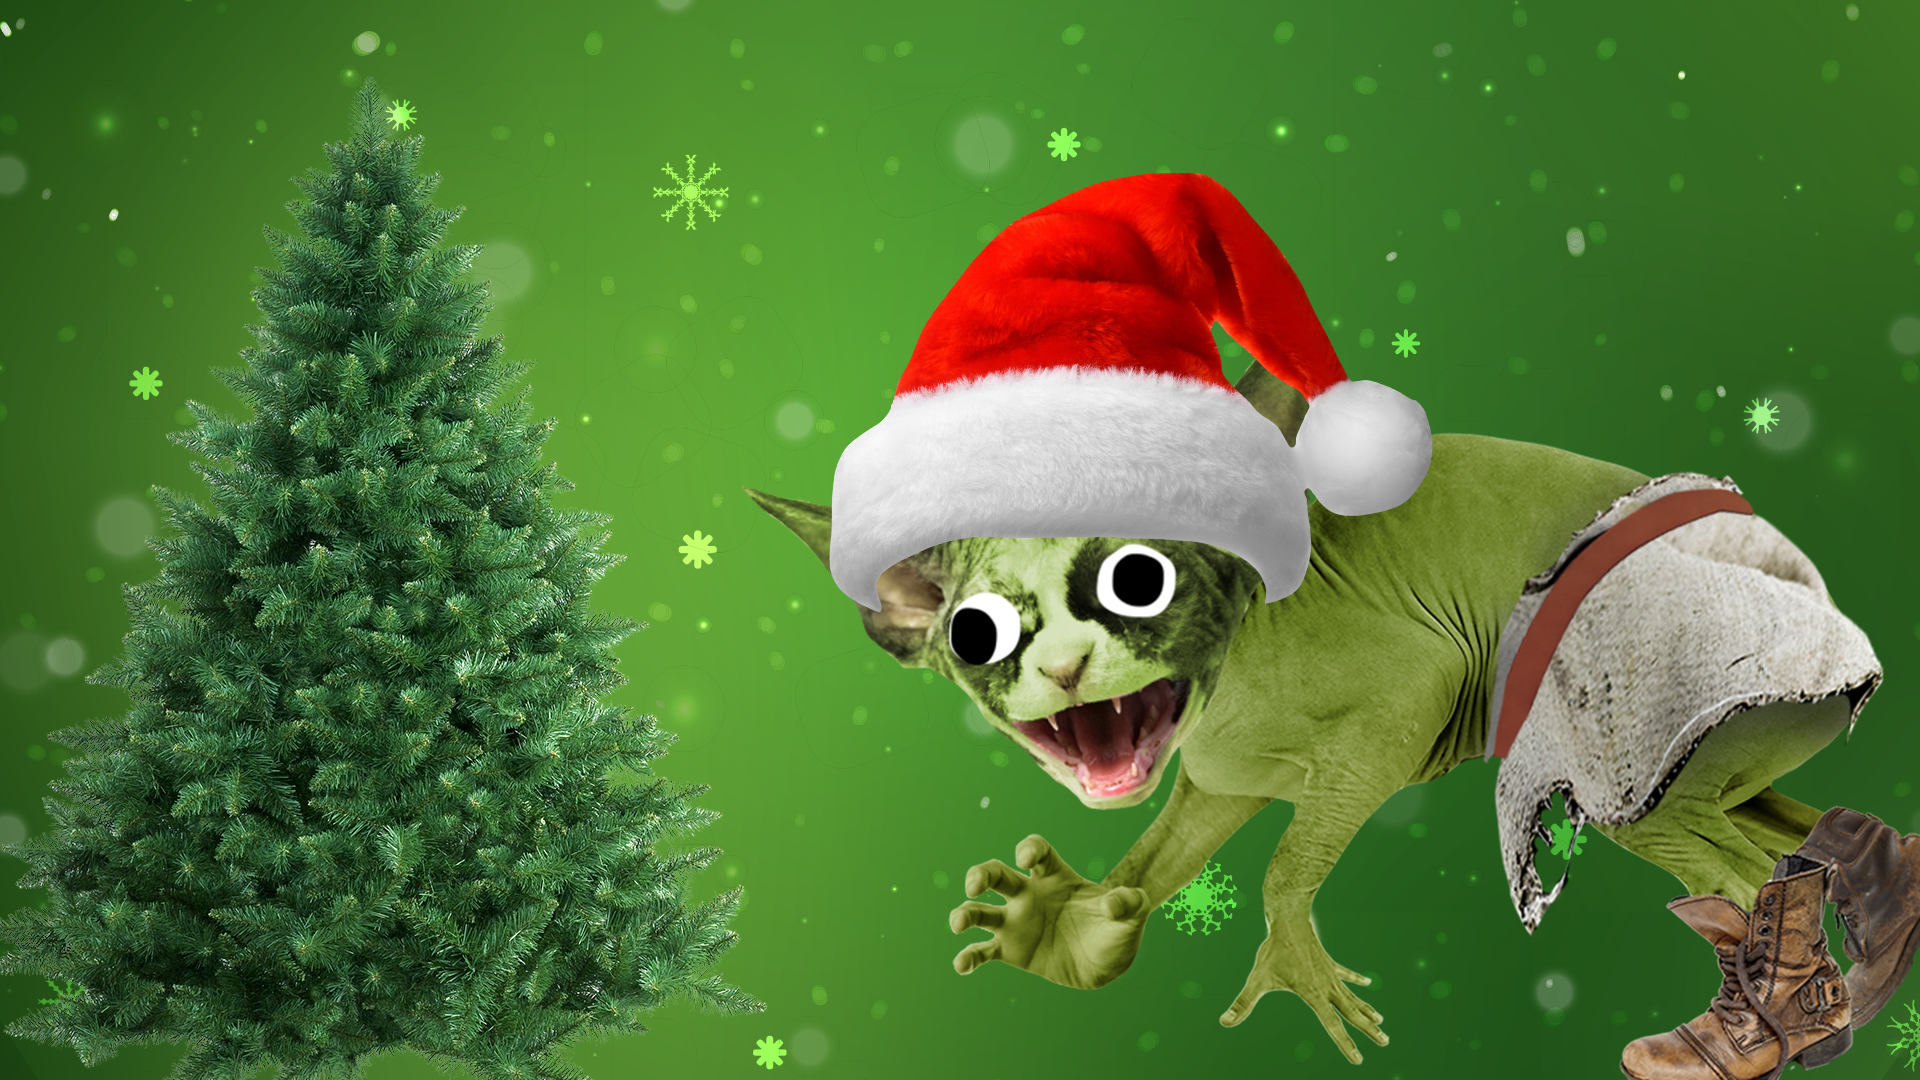 Beano goblin in Santa hat with xmas tree on green Christmas background